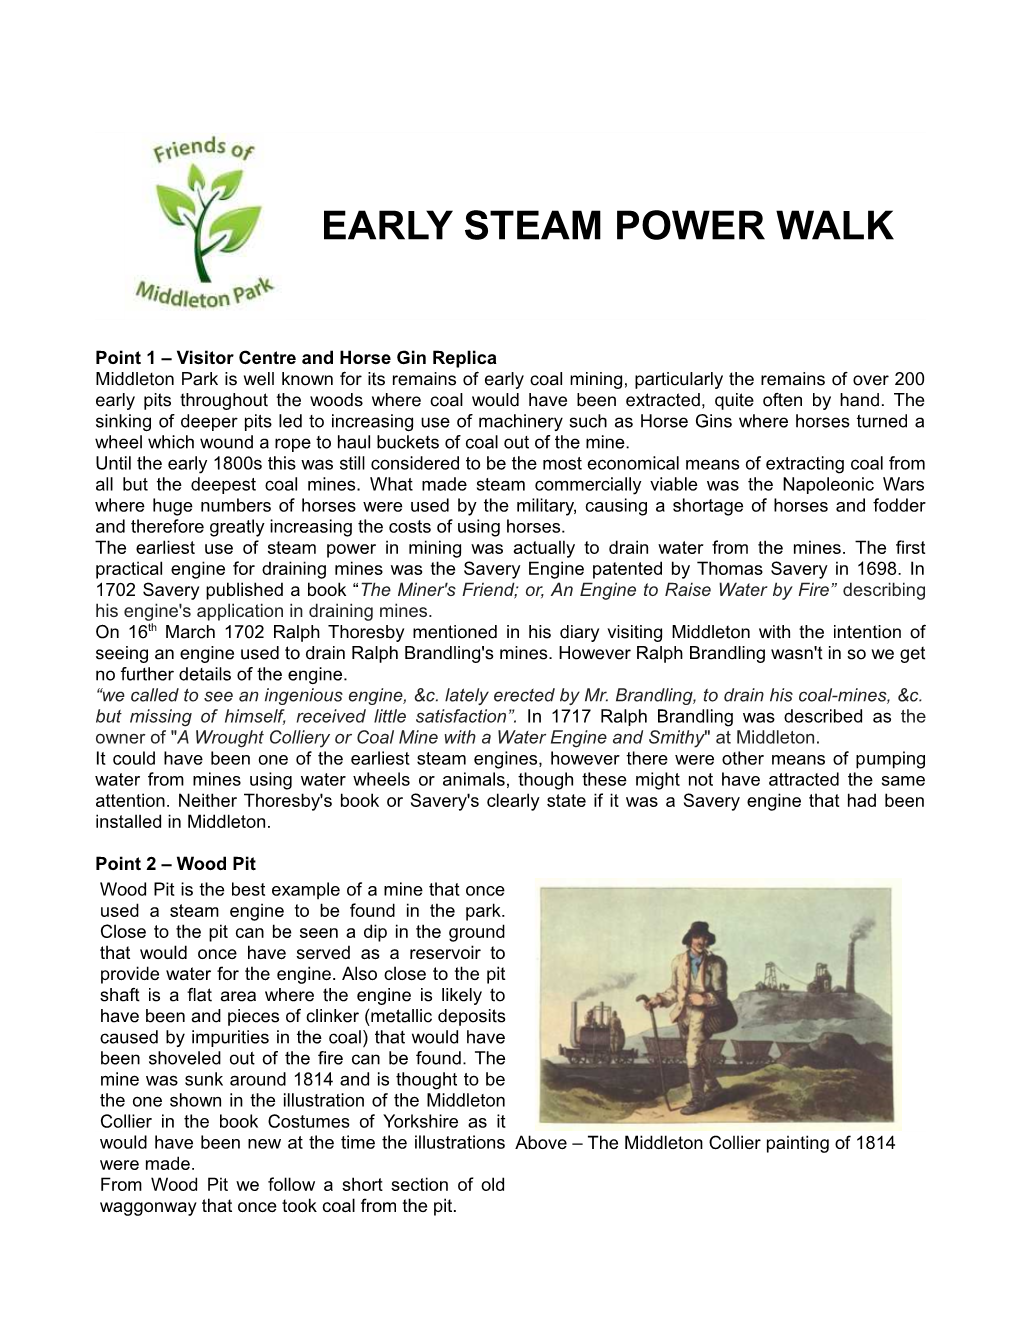 Early Steam Power Walk